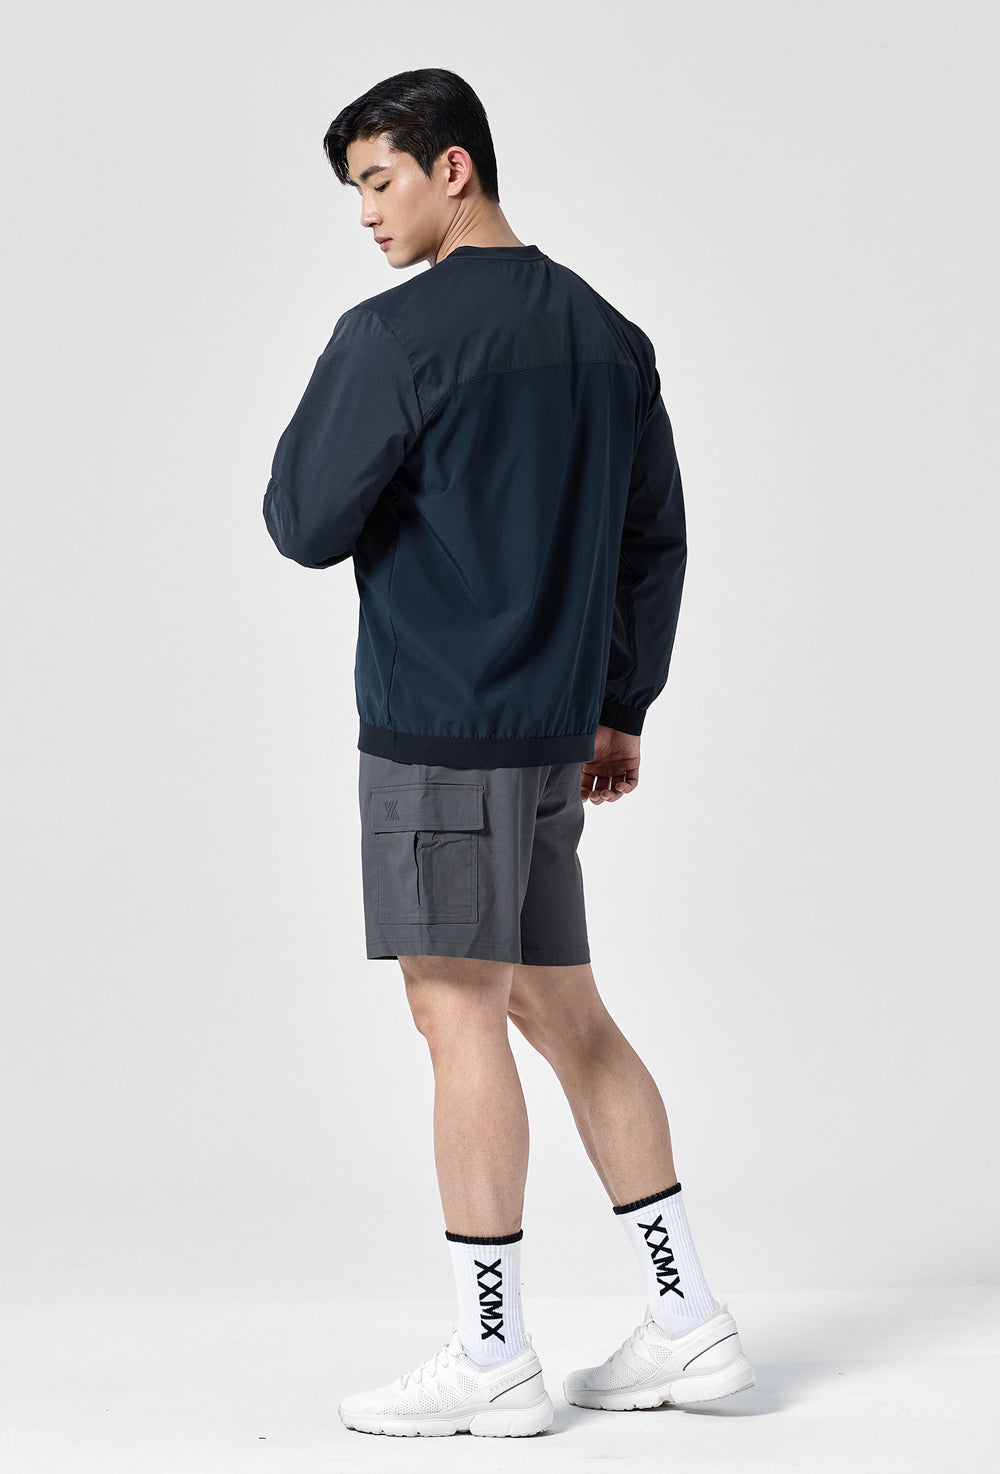 Hardy Stretch Cargo Shorts - Blend Gray